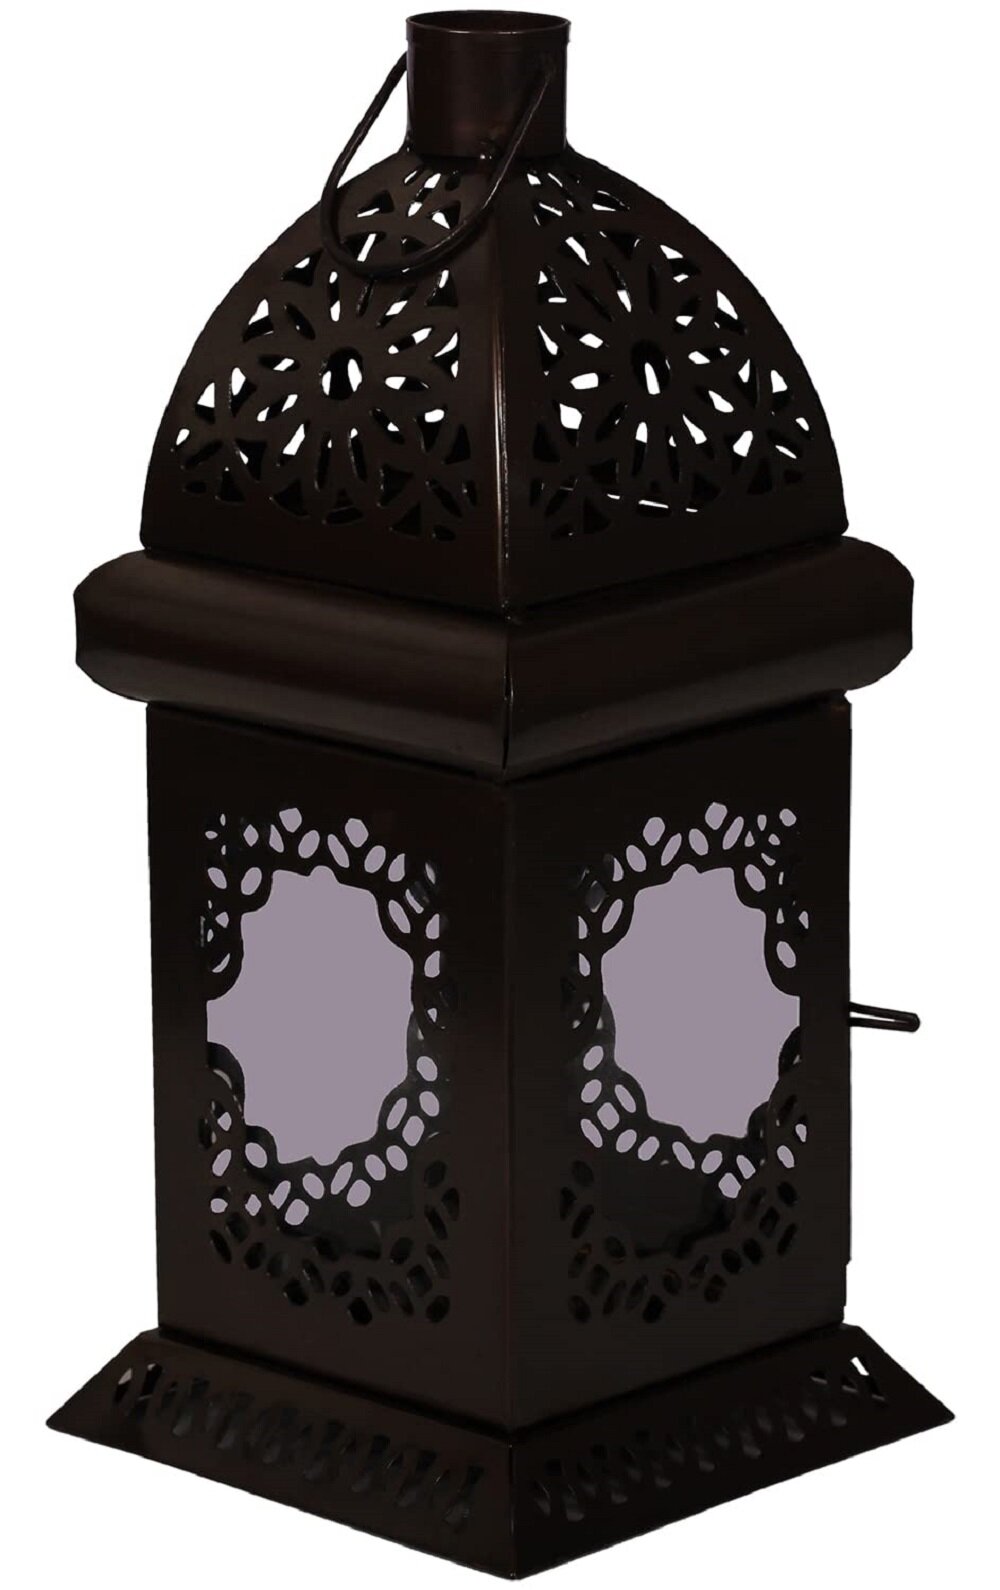 10 Tower Lantern Black Candle Holder Wedding centerpieces 12.8" Tall Set